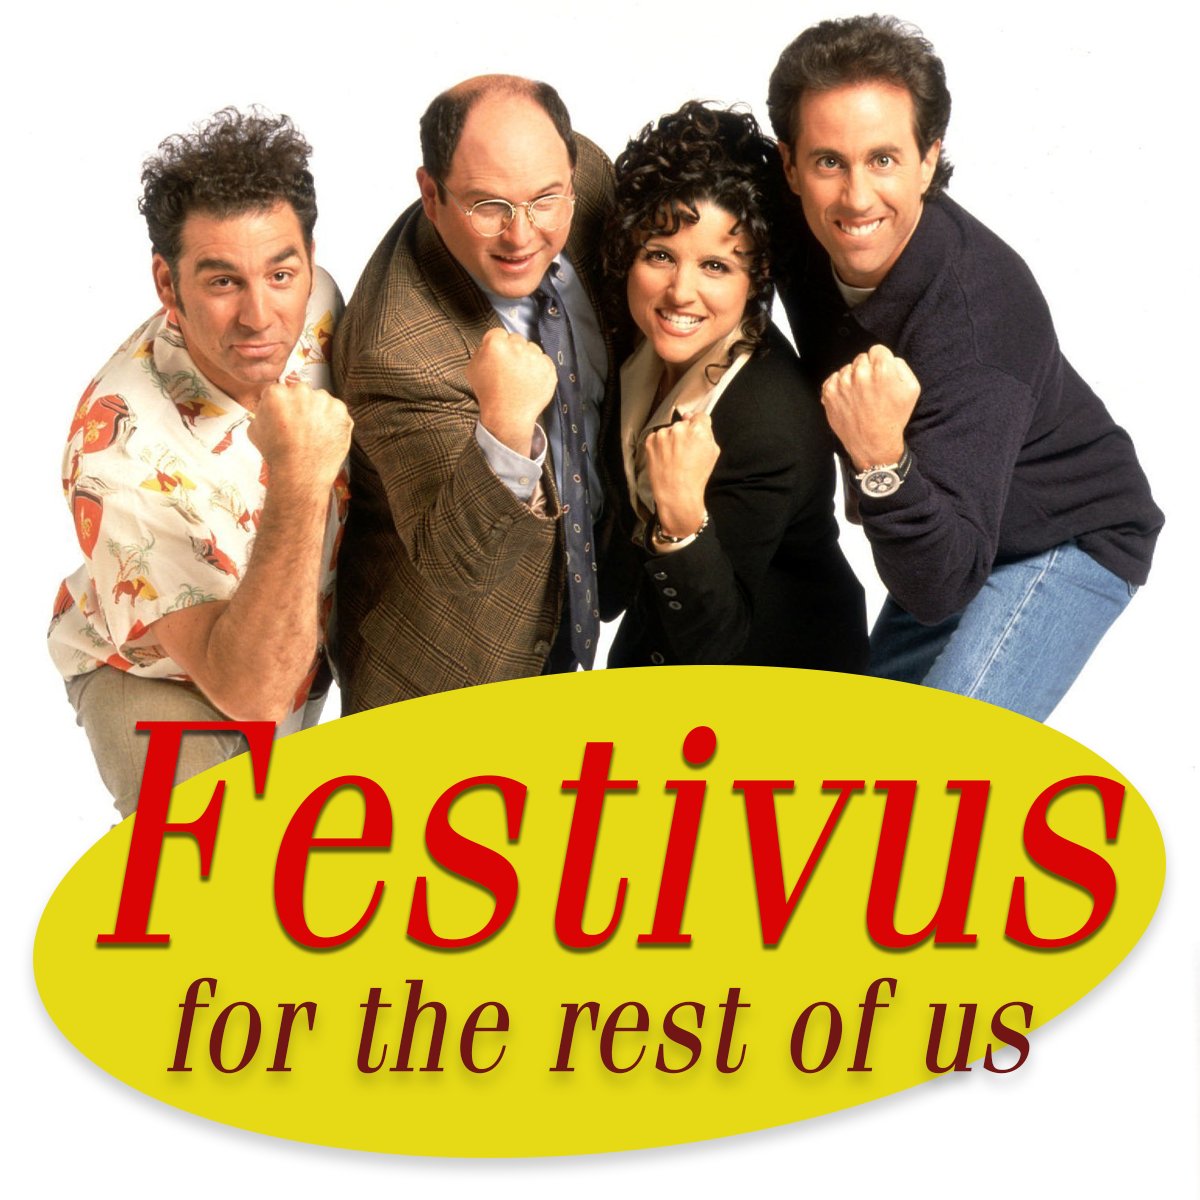 Happy Festivus. A Festivus for the rest of us!